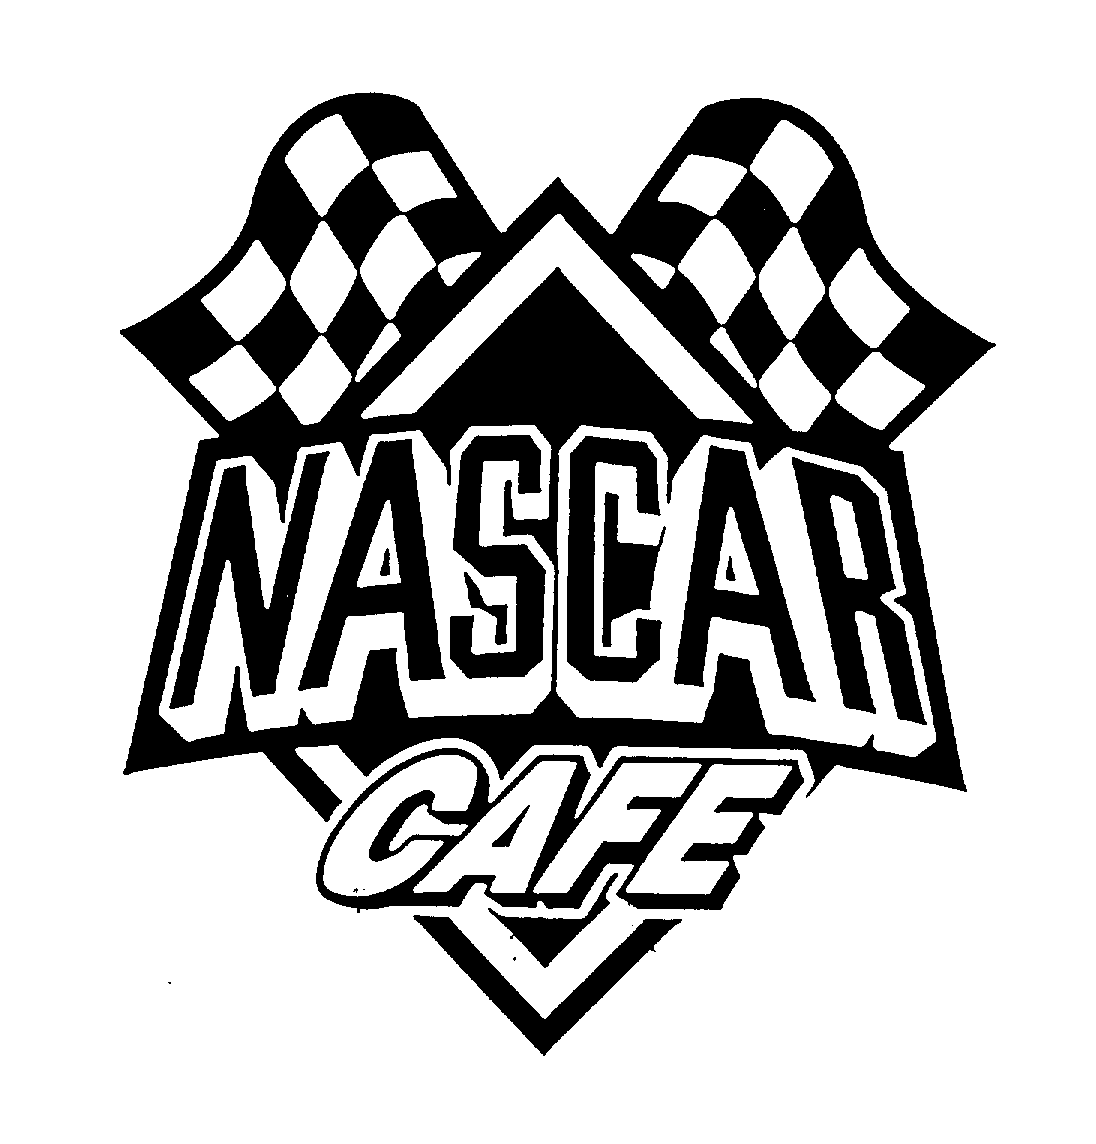  NASCAR CAFE